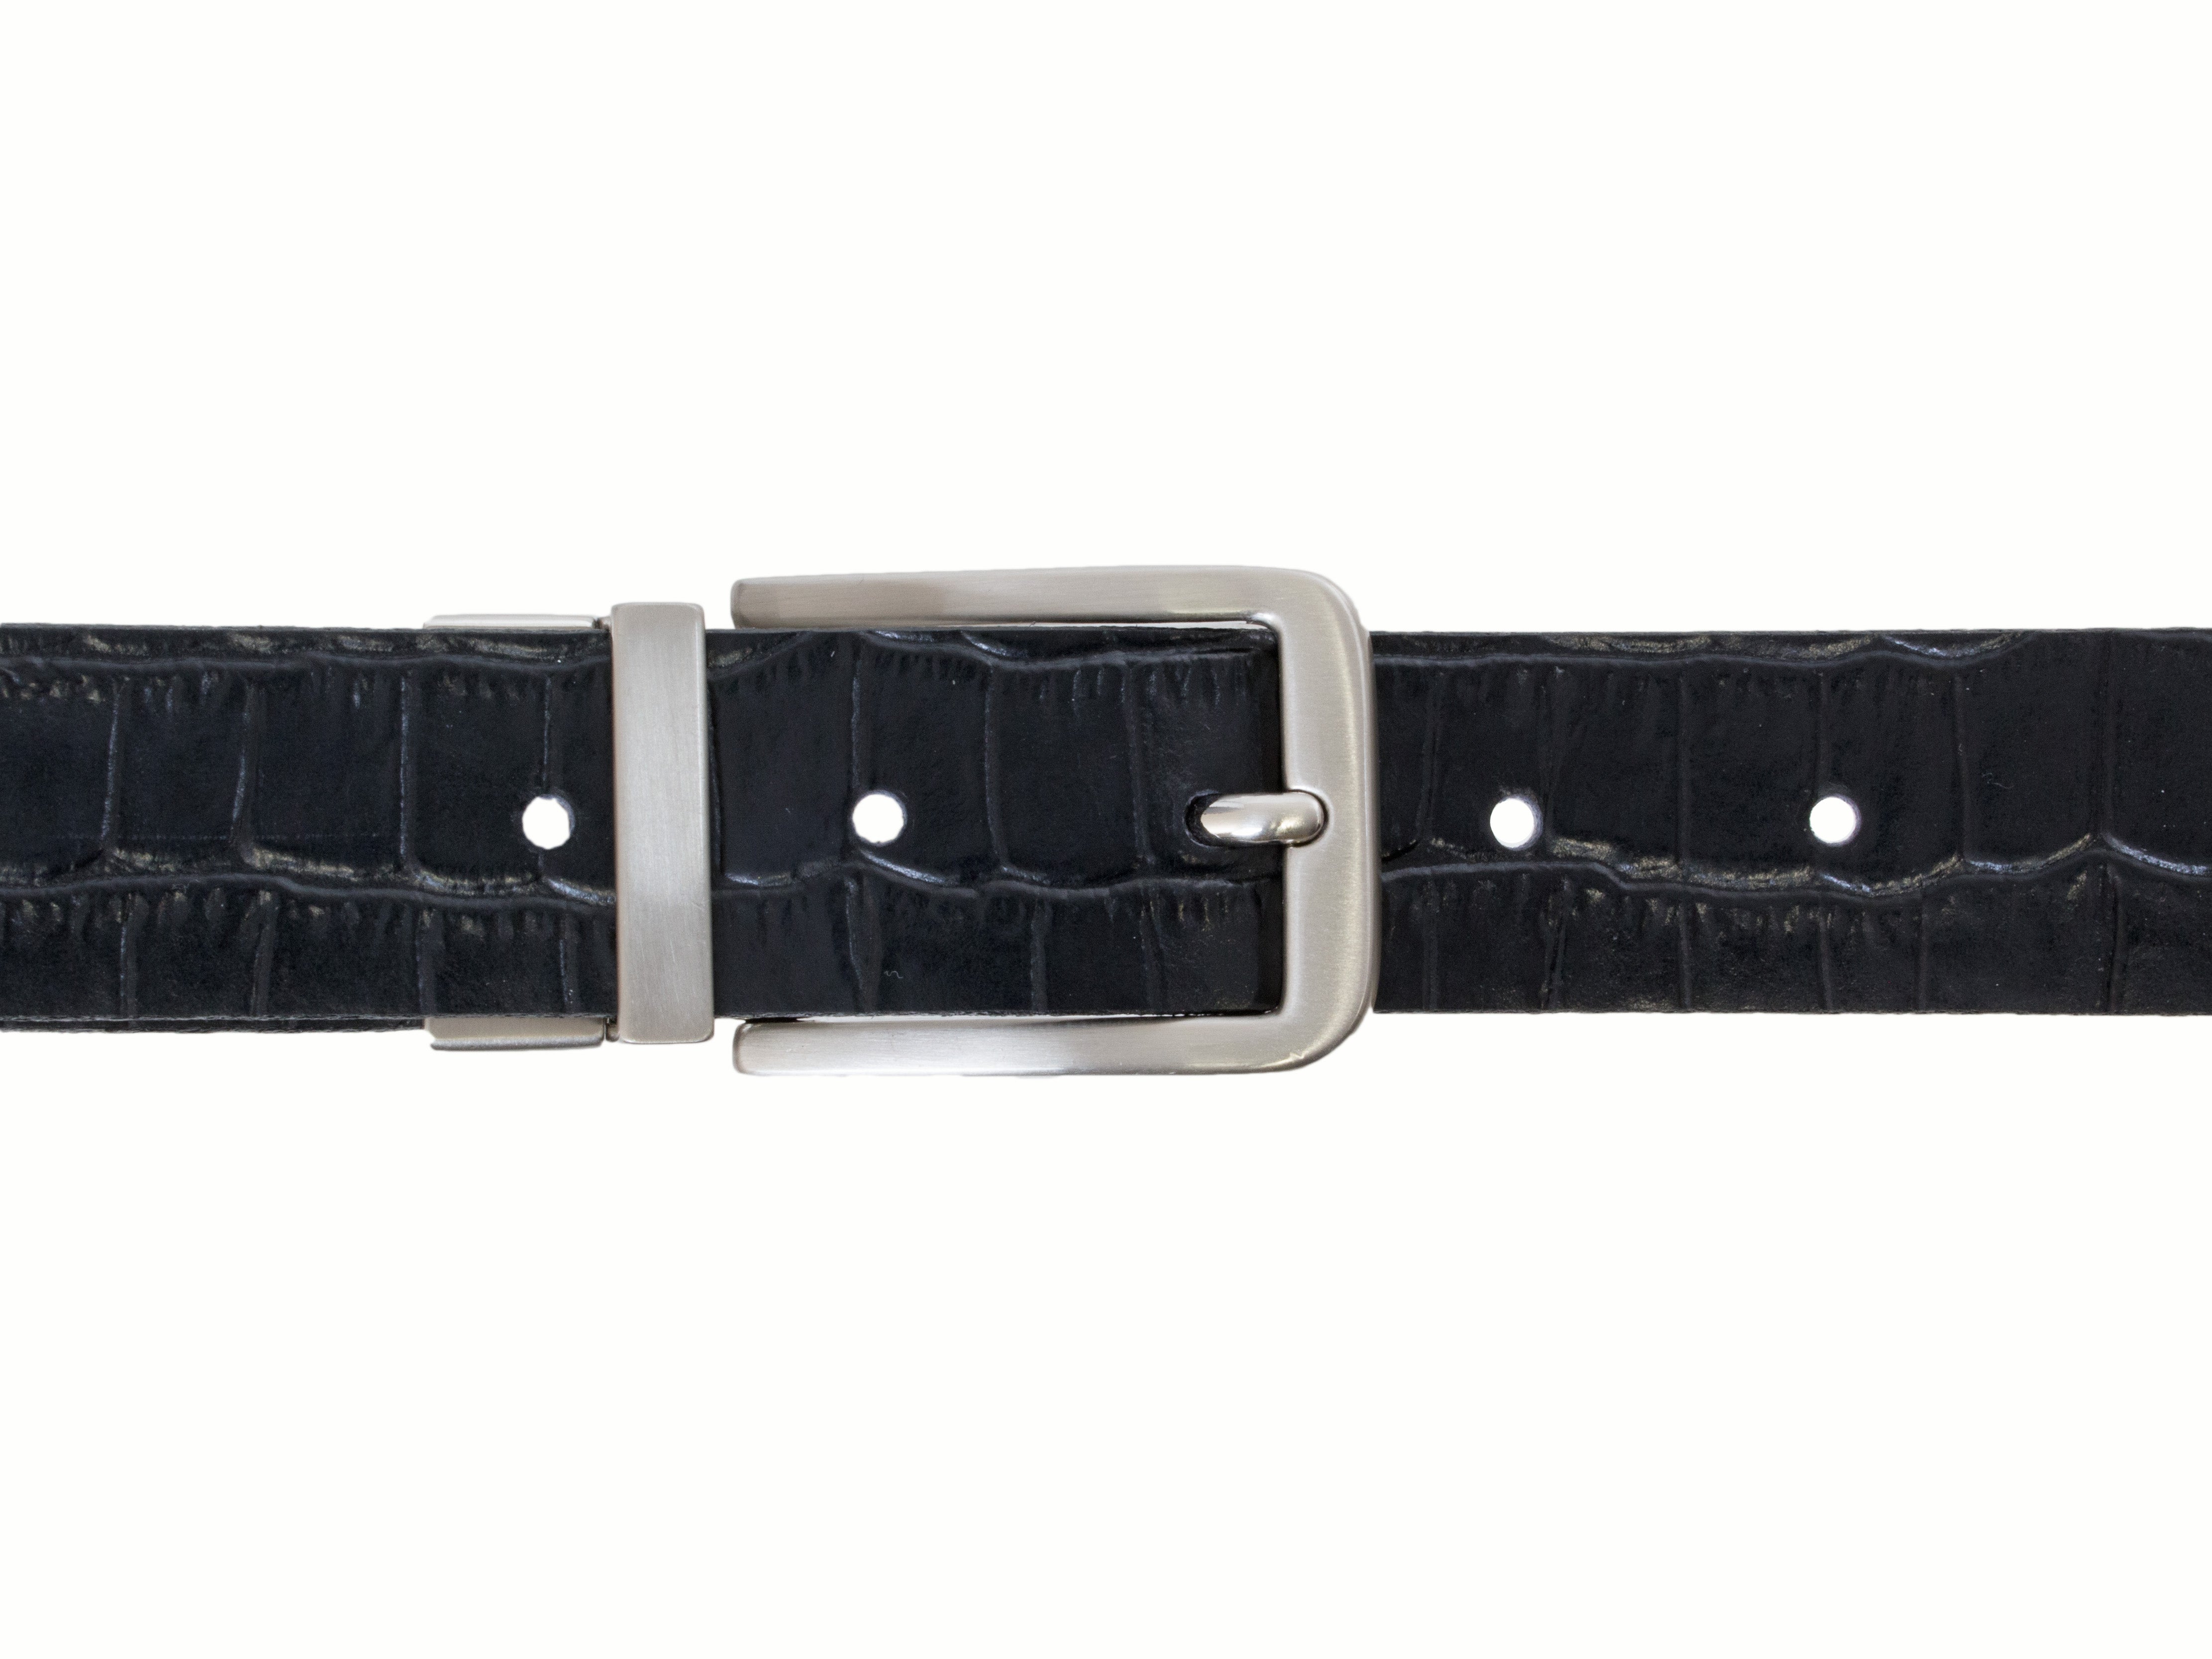 Style 114141 - Women's Reversible Leather Golf Belt